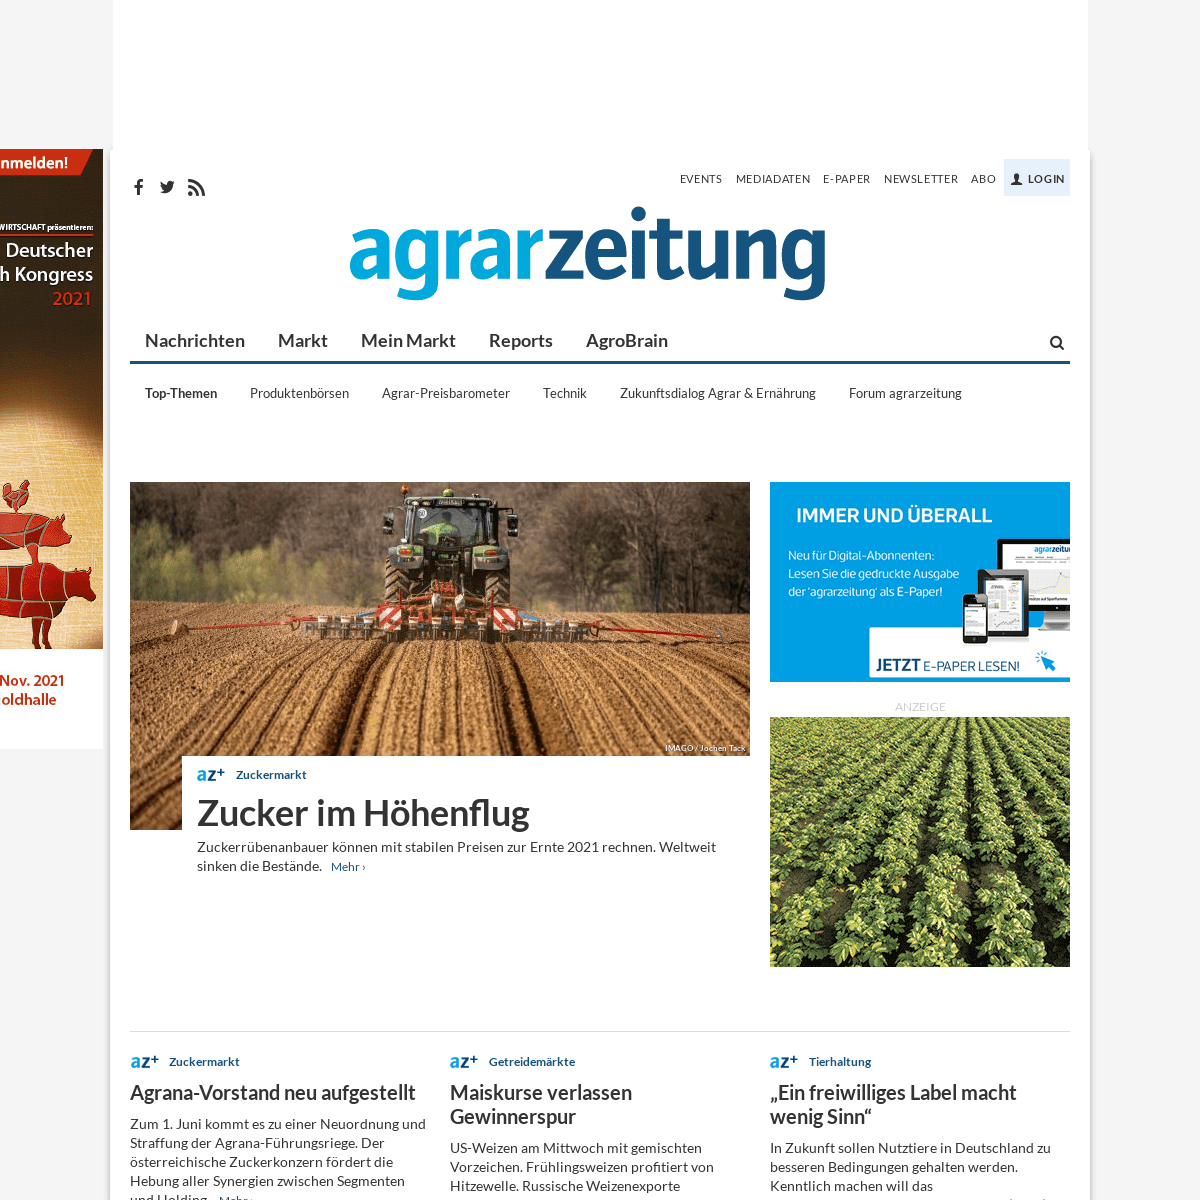 A complete backup of https://agrarzeitung.de